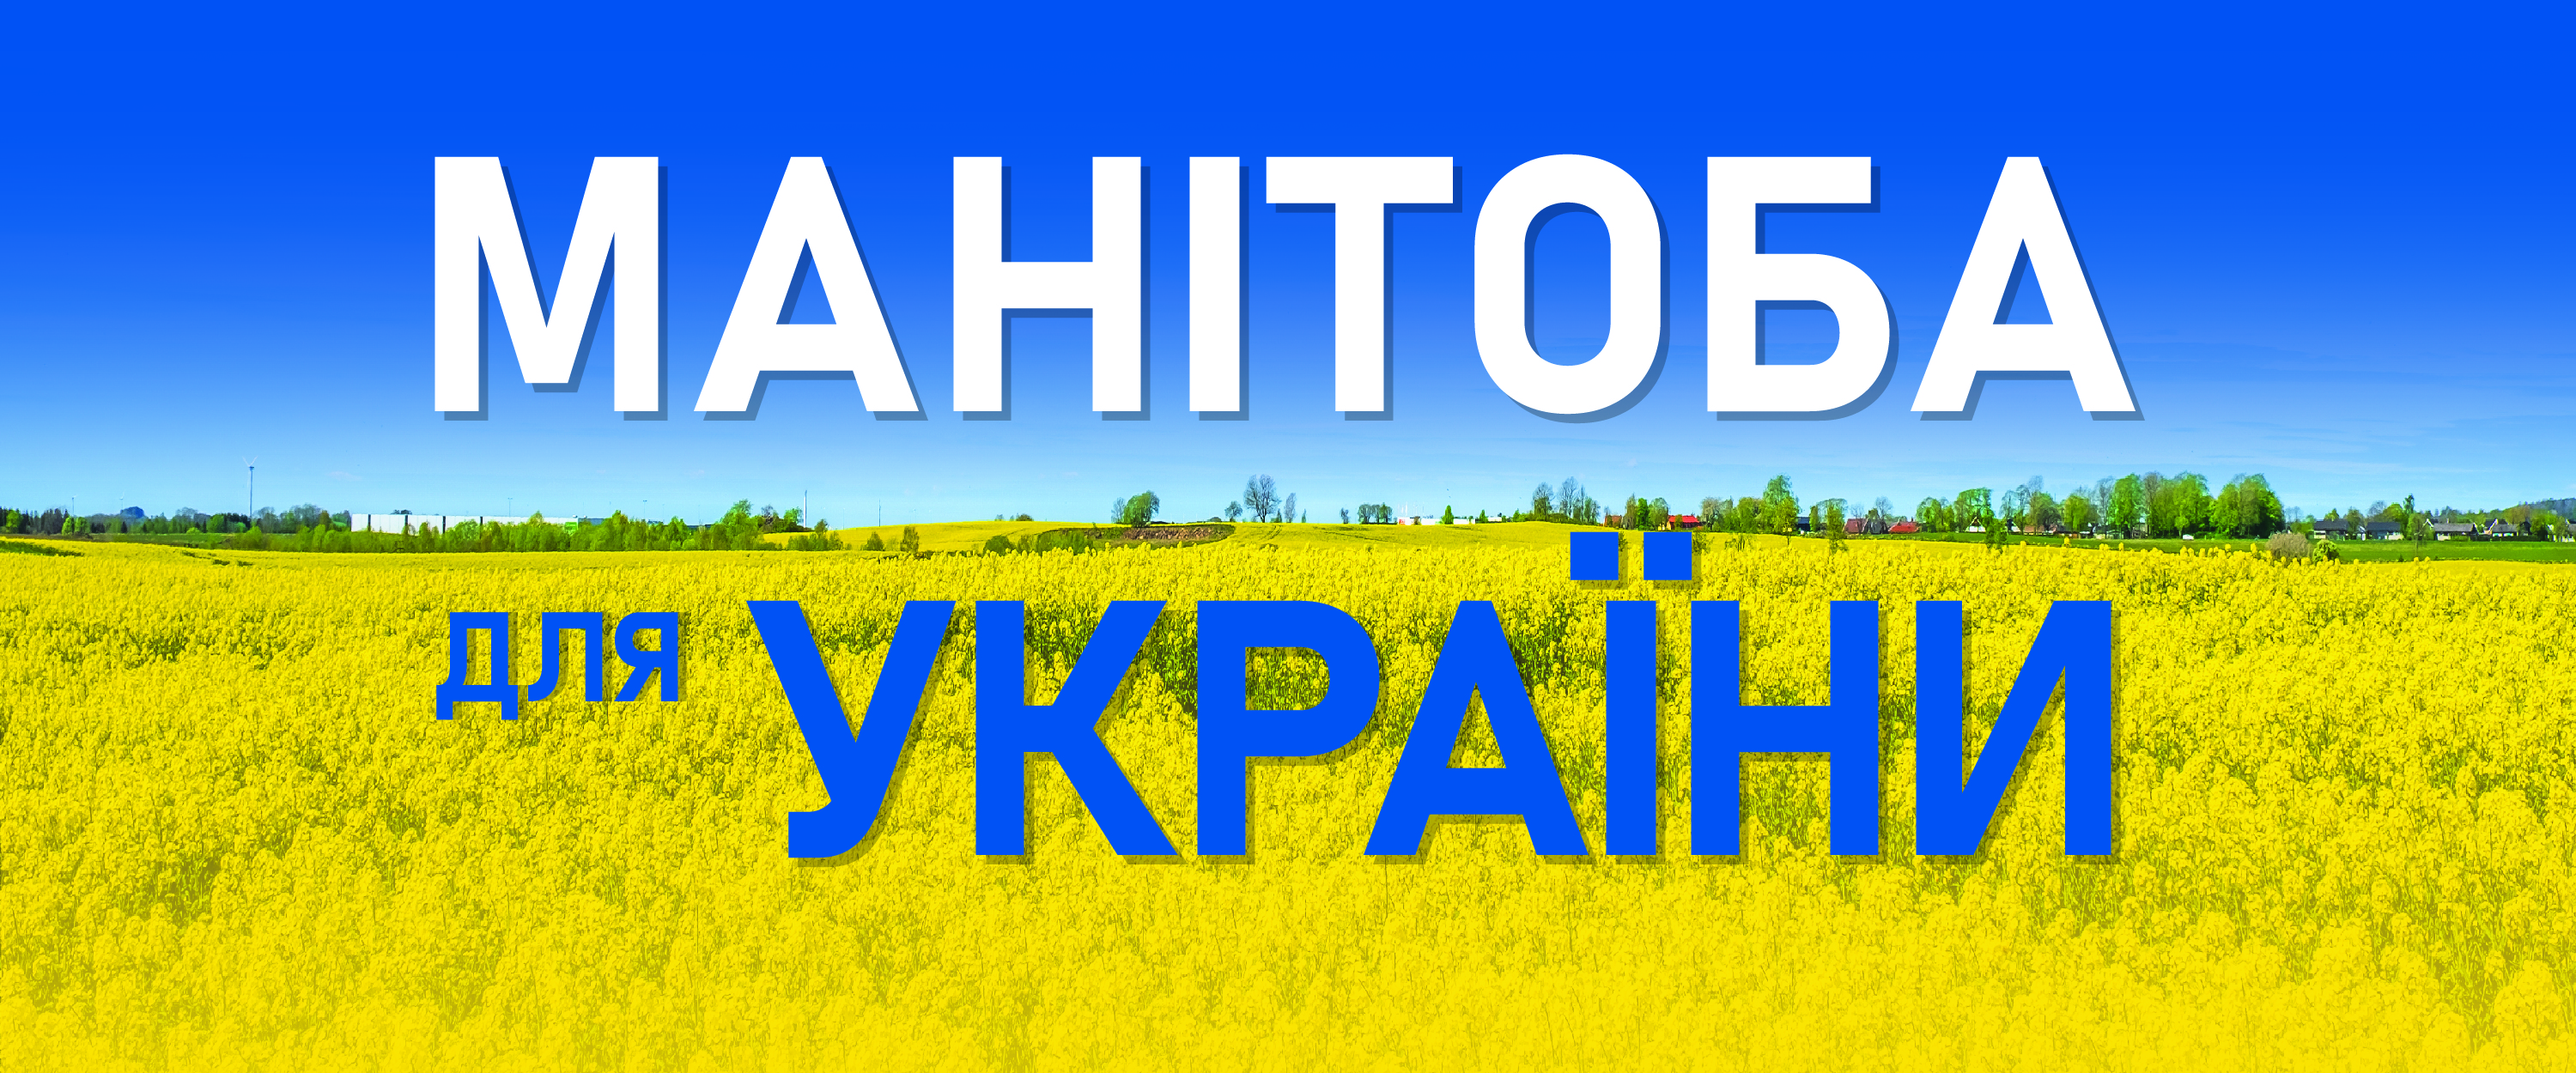 Manitoba For Ukraine